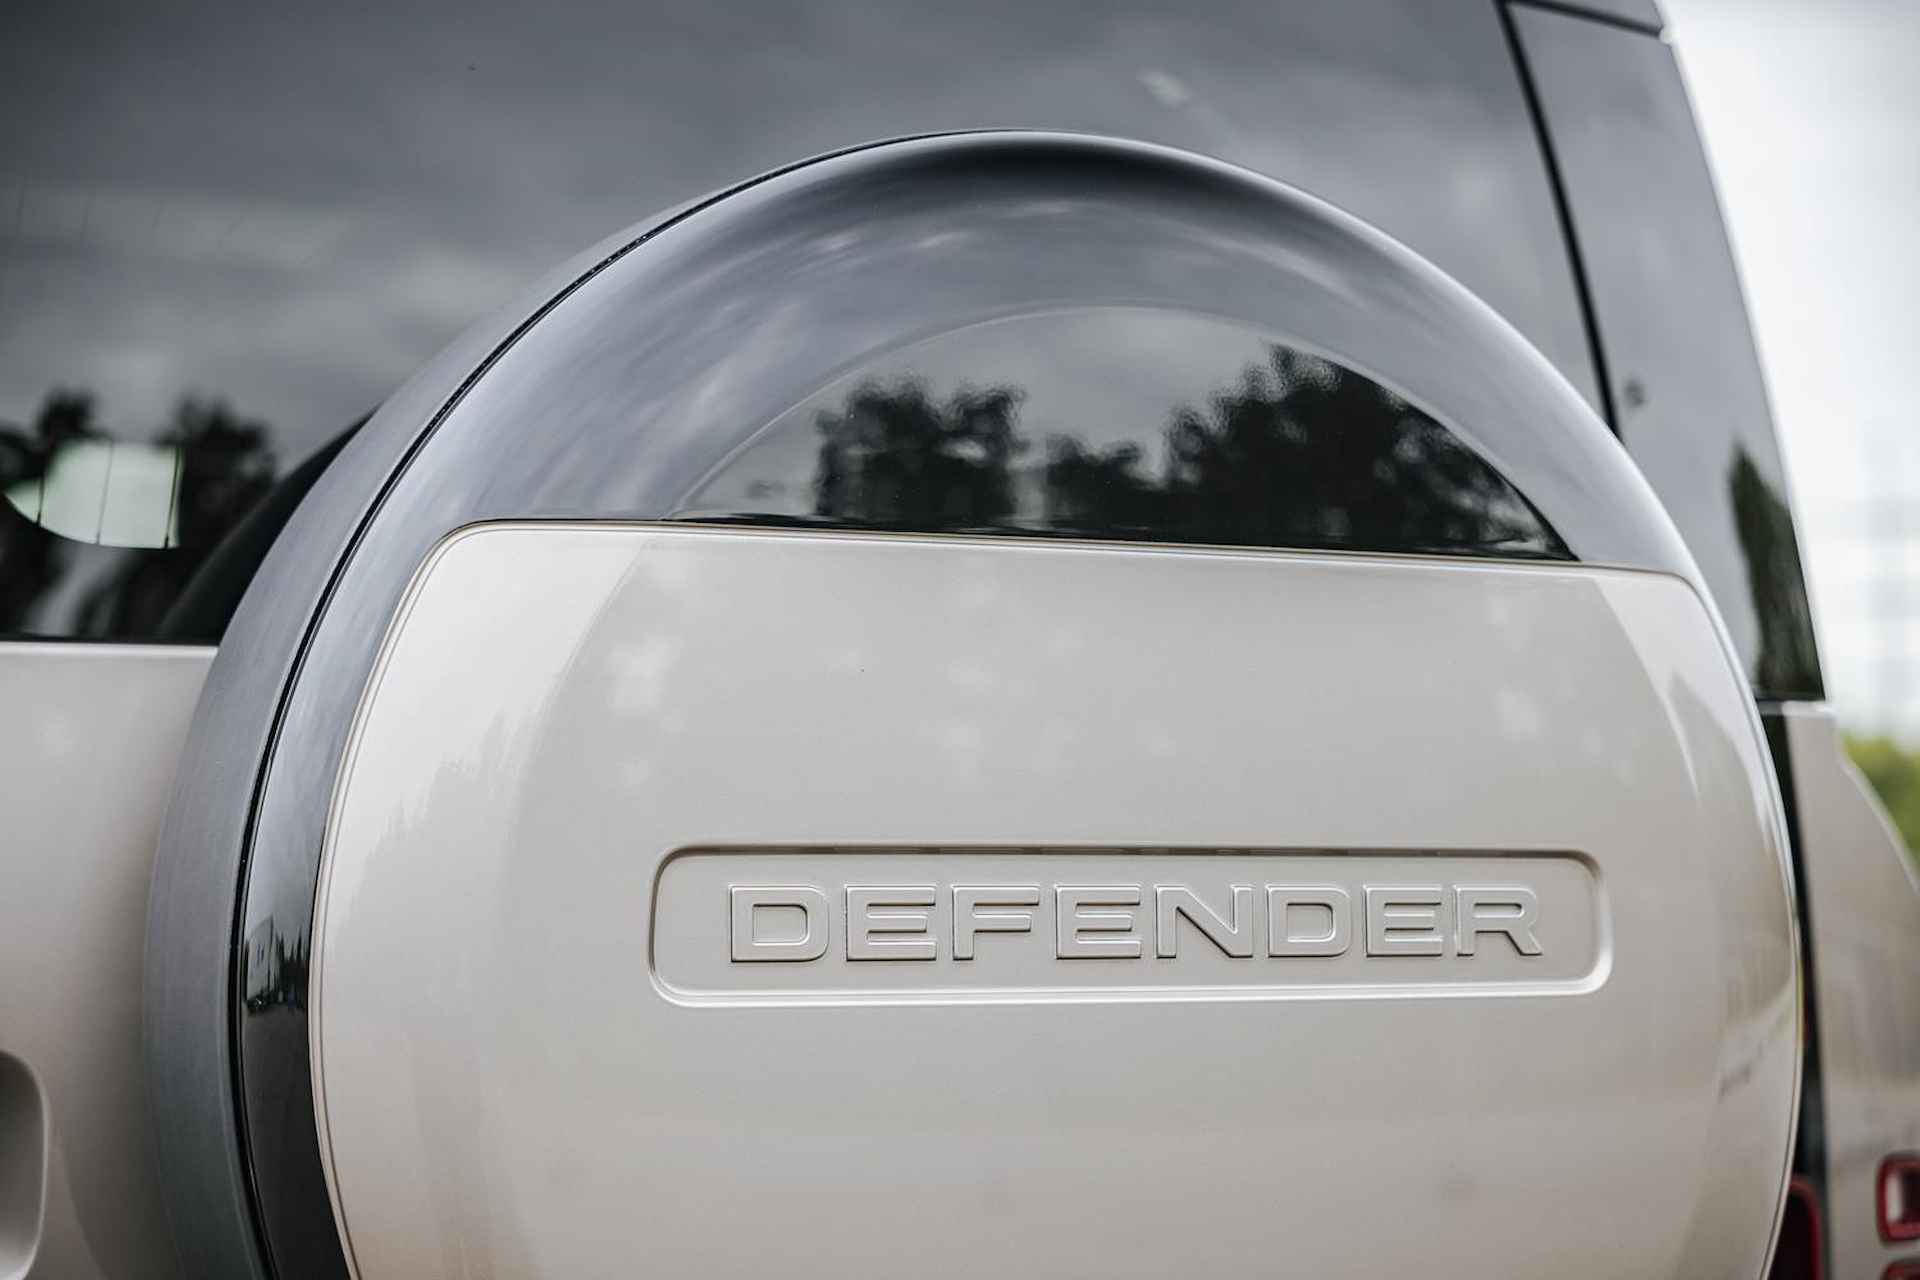 Land Rover Defender 2.0 P400e 110 X-Dynamic HSE | Panoramadak | 22" Velgen in Gloss Black | 11,4" Touch Screen | Cold Climate Pack | Elektrische Trekhaak | Expedition imperiaal | Uitklapbare Dakladder| All Season Banden - 14/43